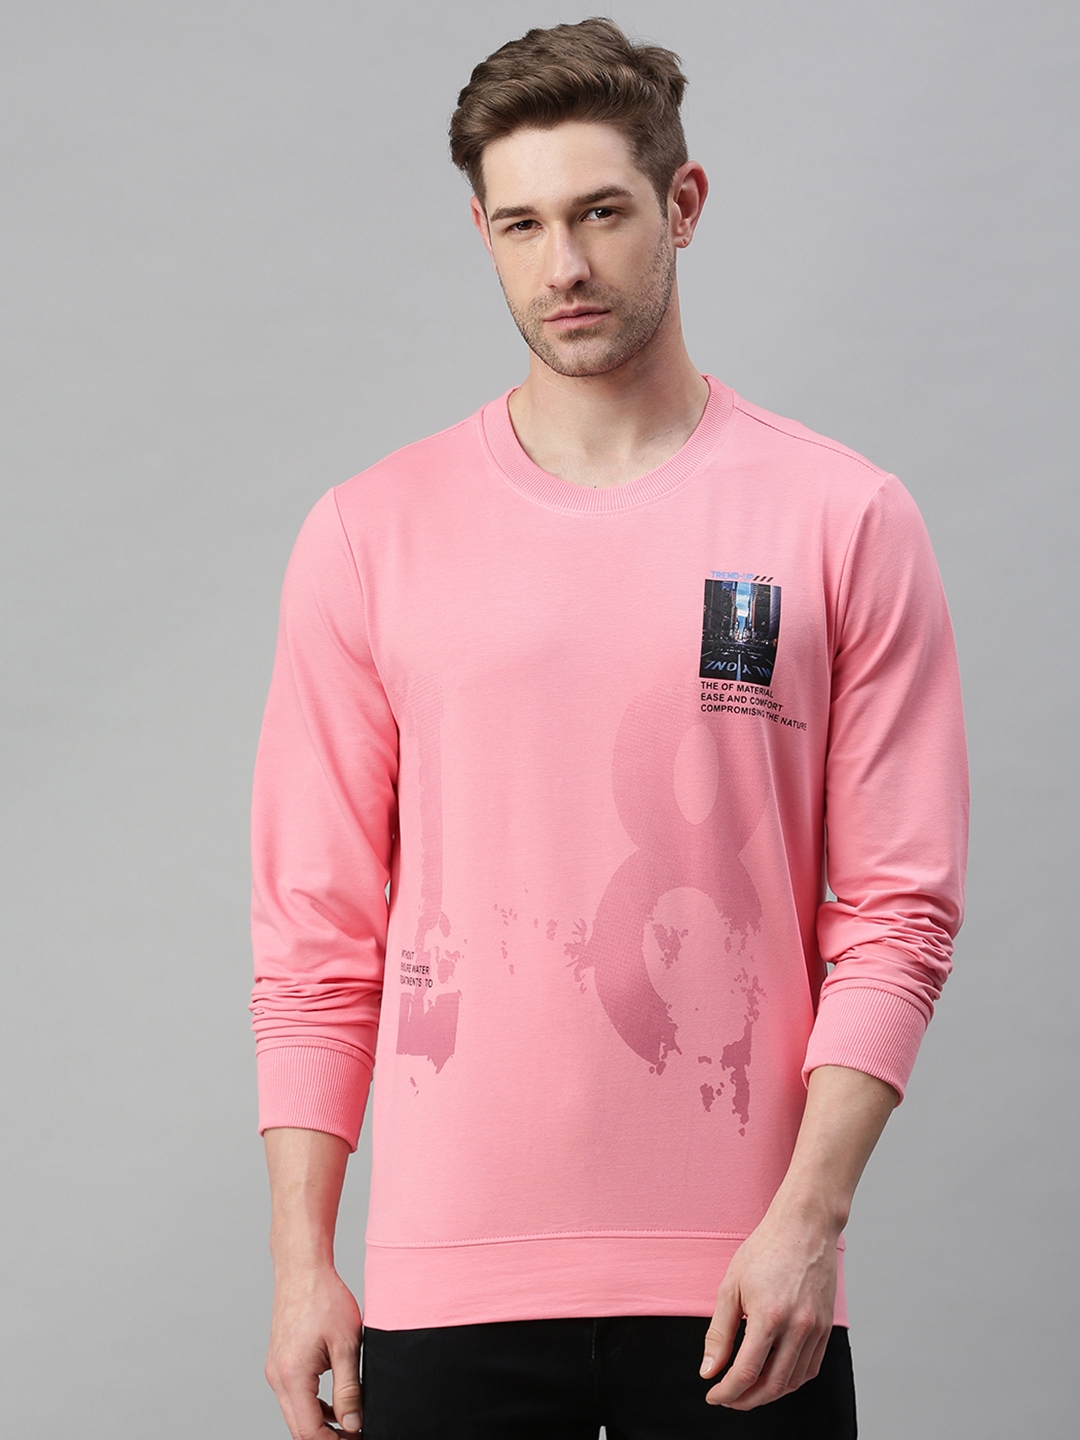 Men's Pink Cotton Blend Printed Sweatshirts